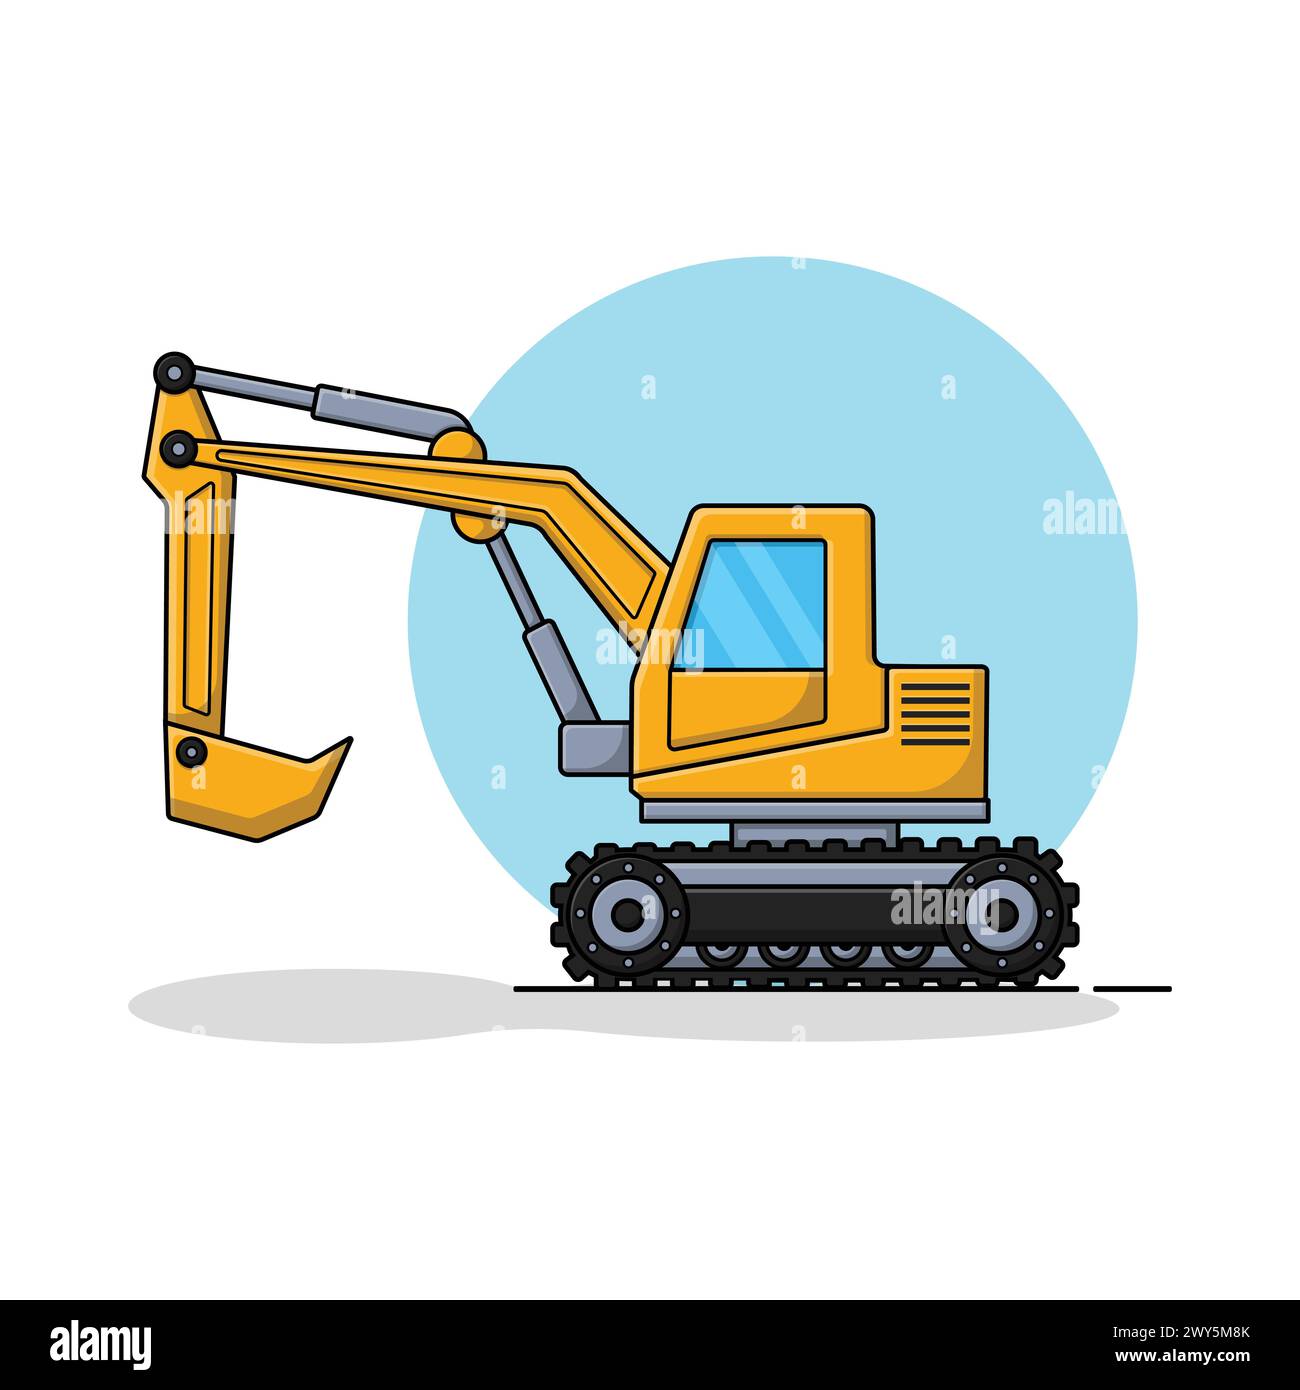 Yellow Excavator Vector Illustration. Construction Equipment Concept Stock Vector